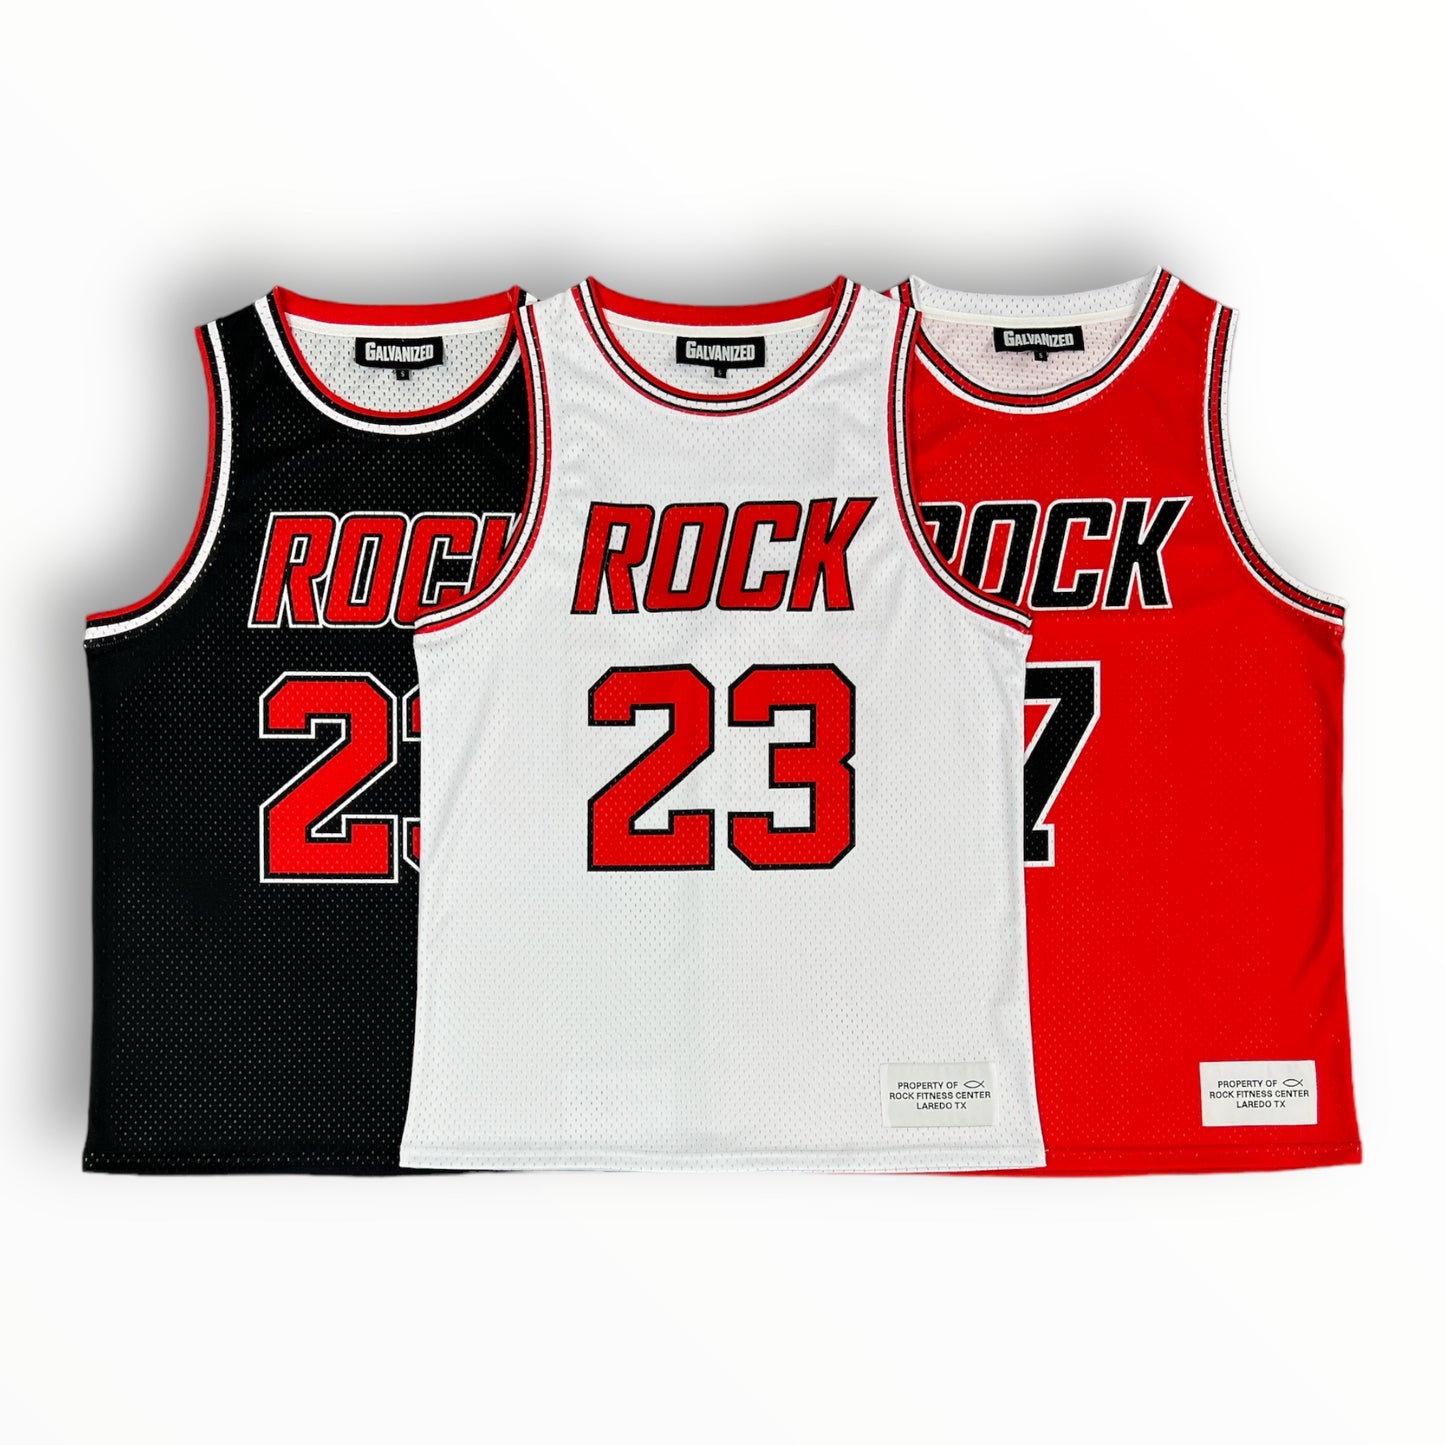 Rock Basketball Jersey